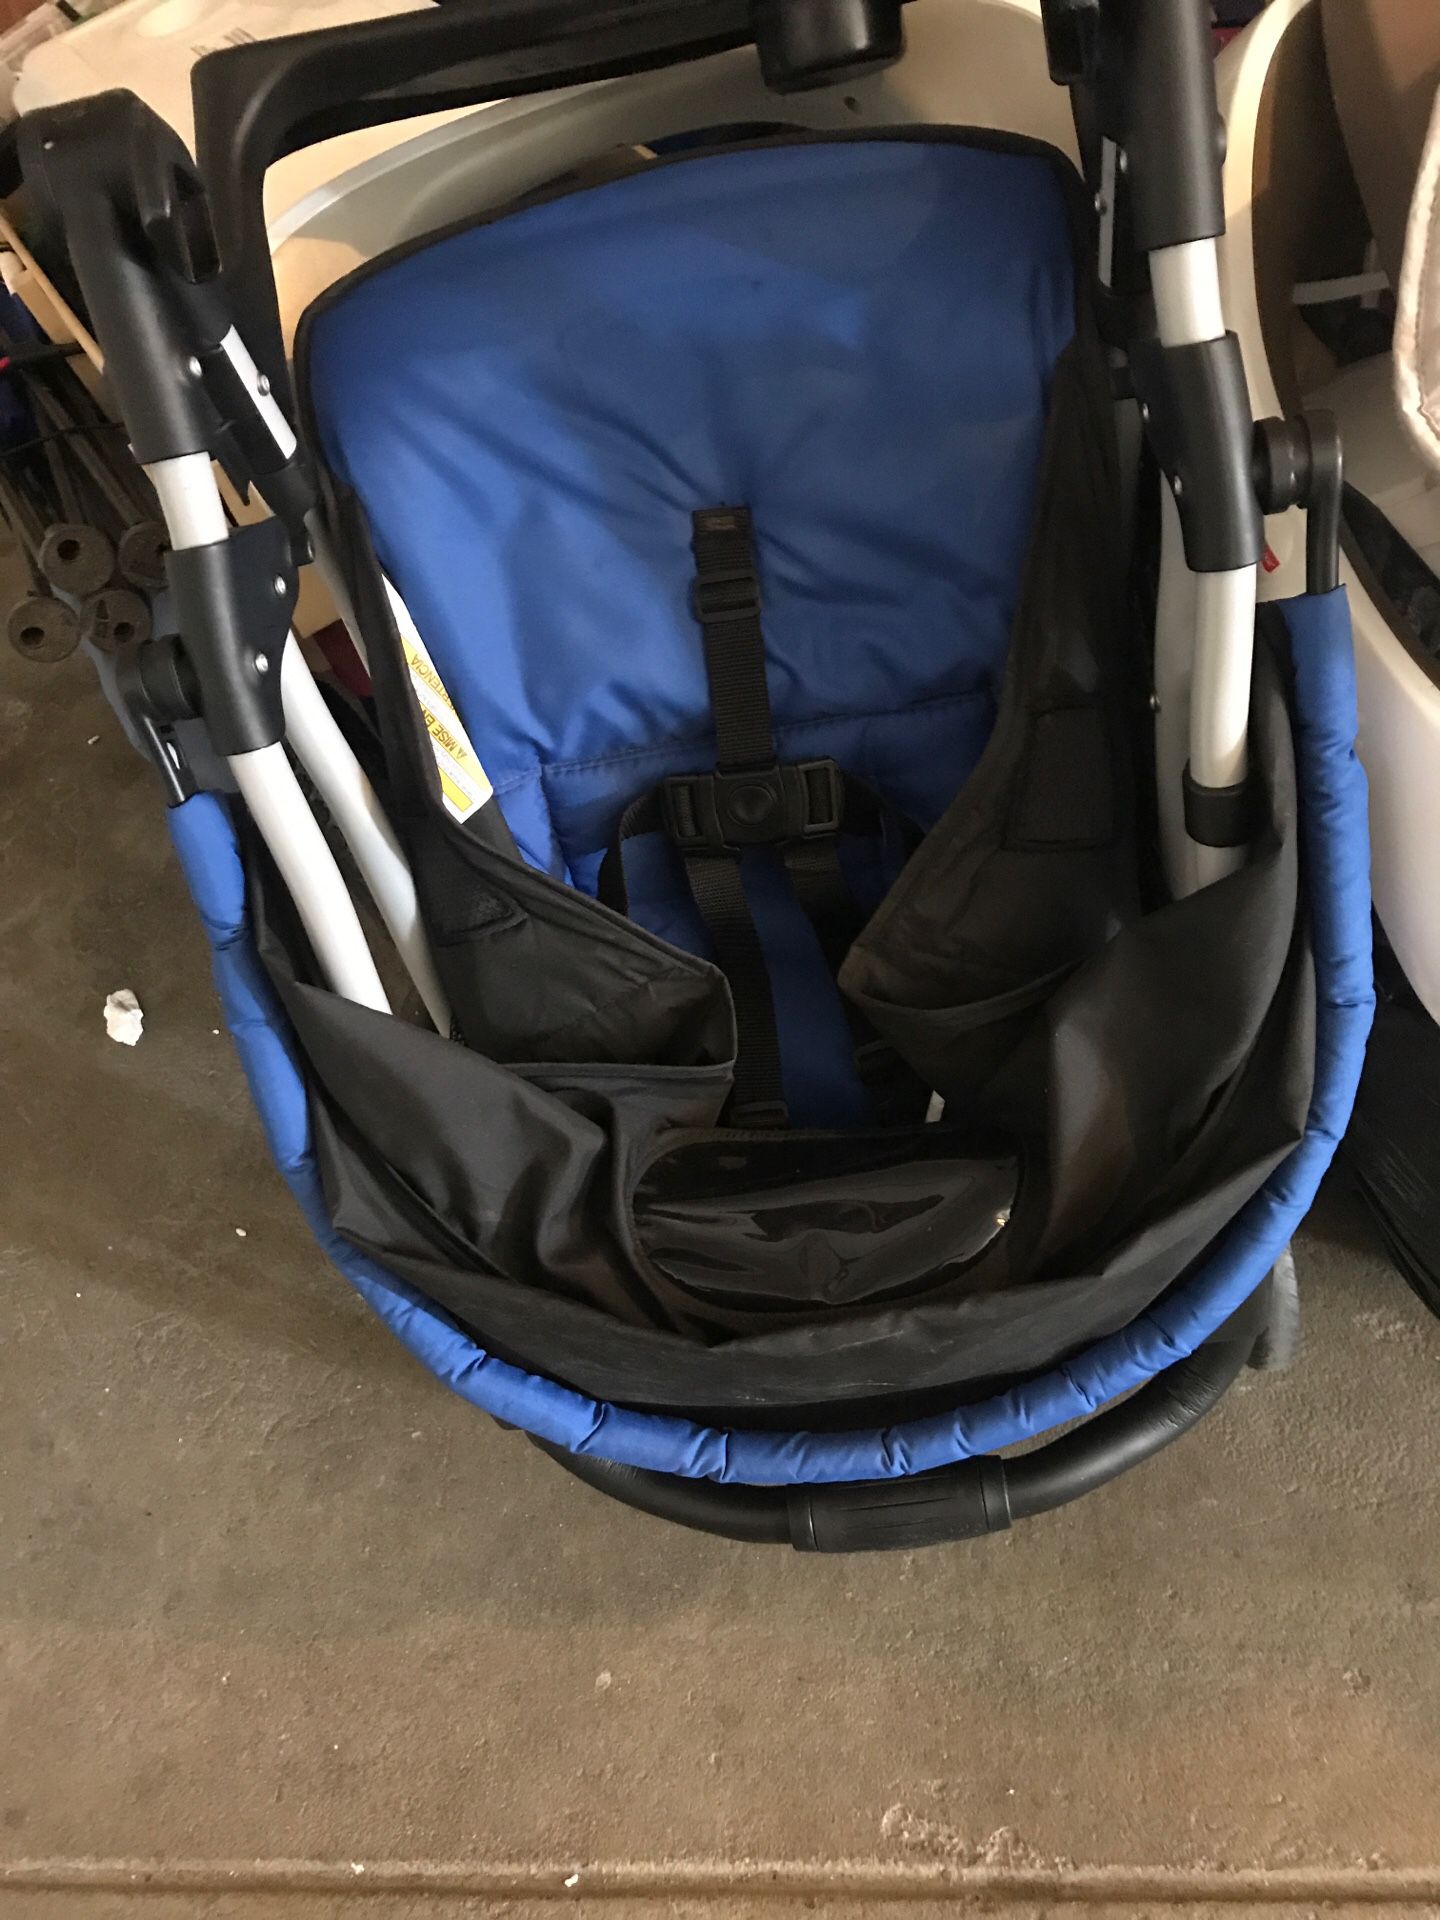 Baby boy/ Blue travel system/ Stroller & car seat